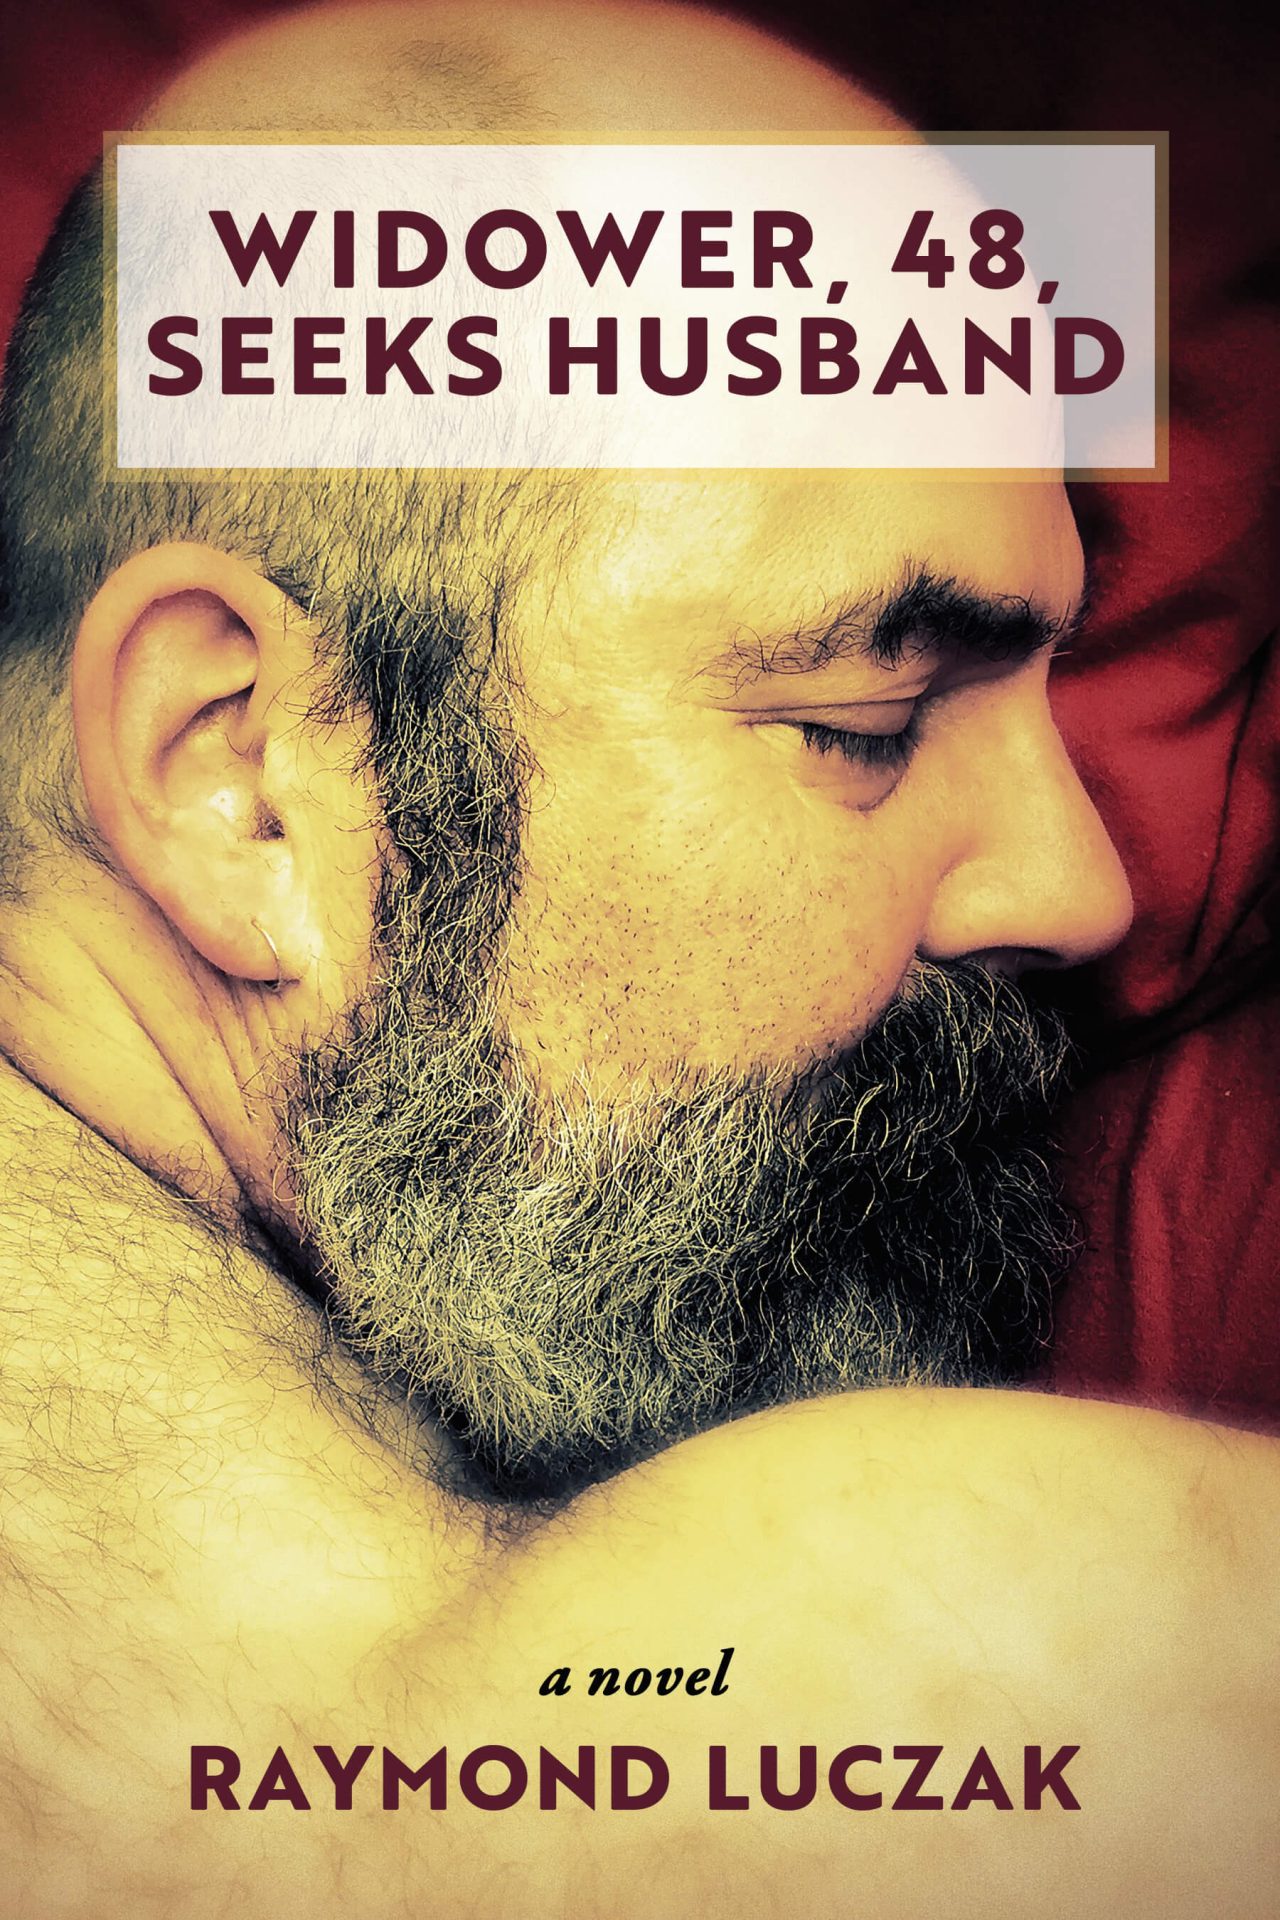 Book cover for Widower, 48, Seeks Husband by Raymond Luczak; a white man with a salt-and-pepper beard sleeping